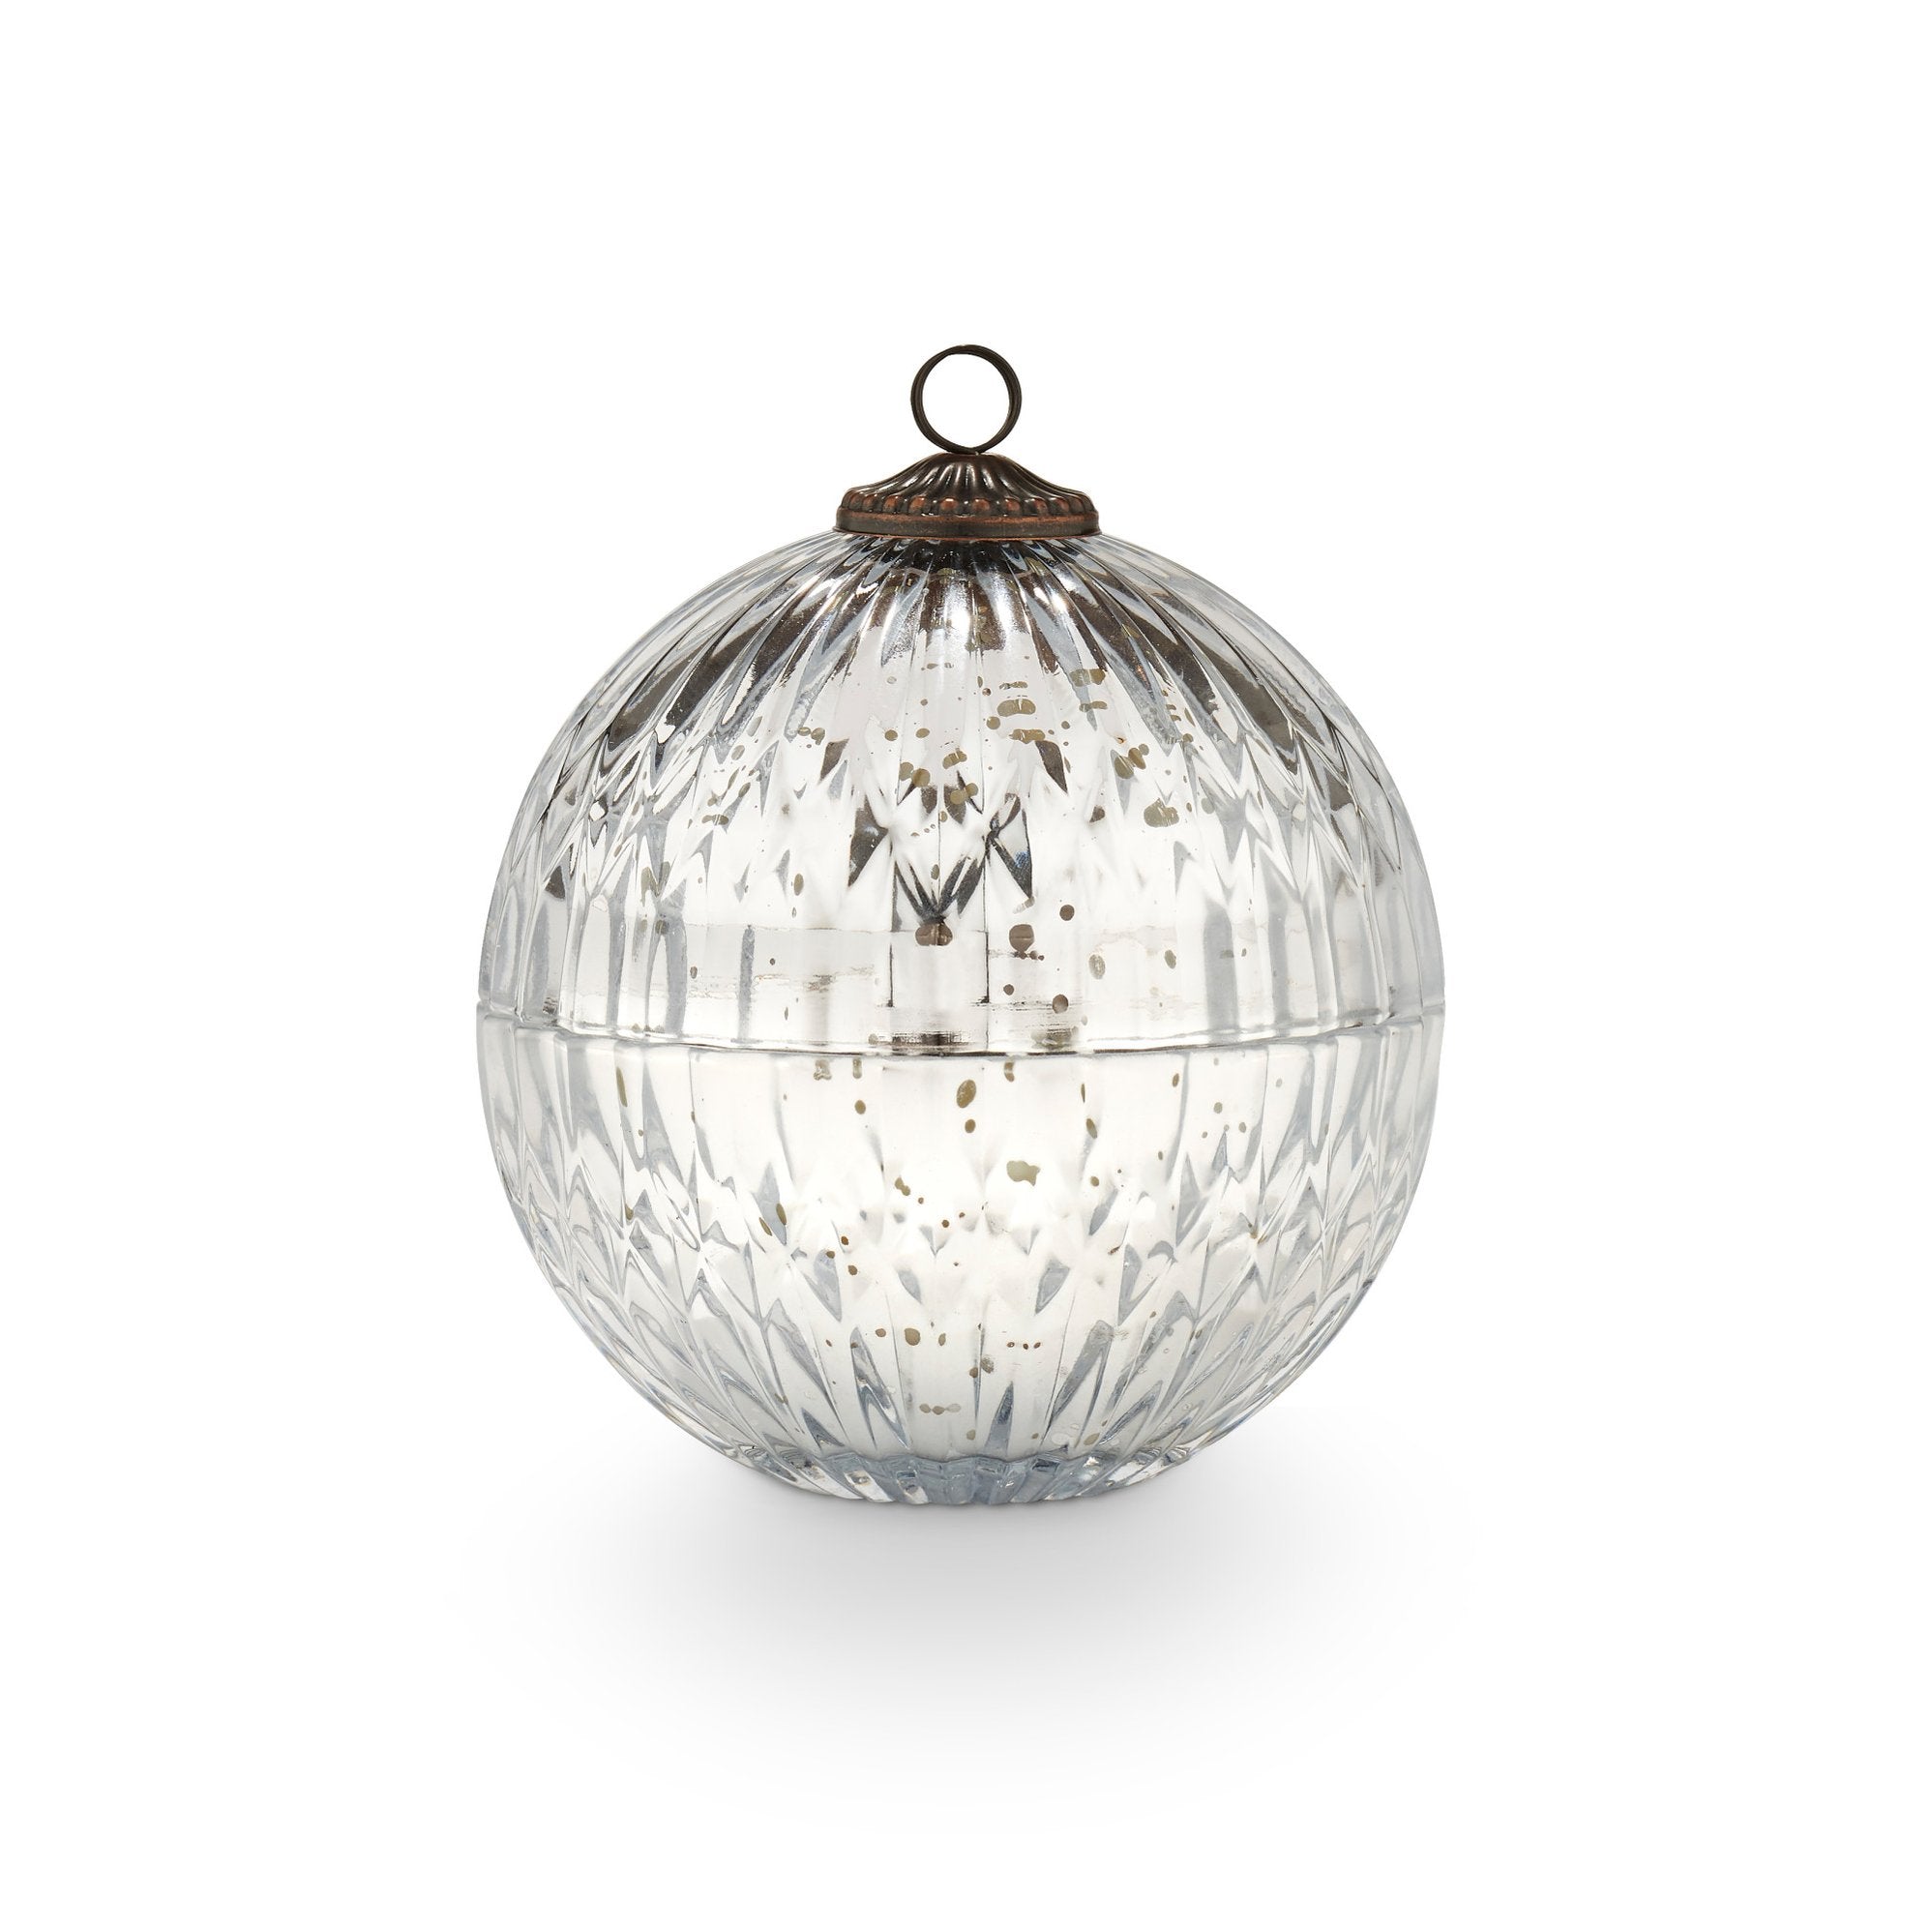 Illume - Silver Mercury Glass Ornament Candle / Balsam & Cedar